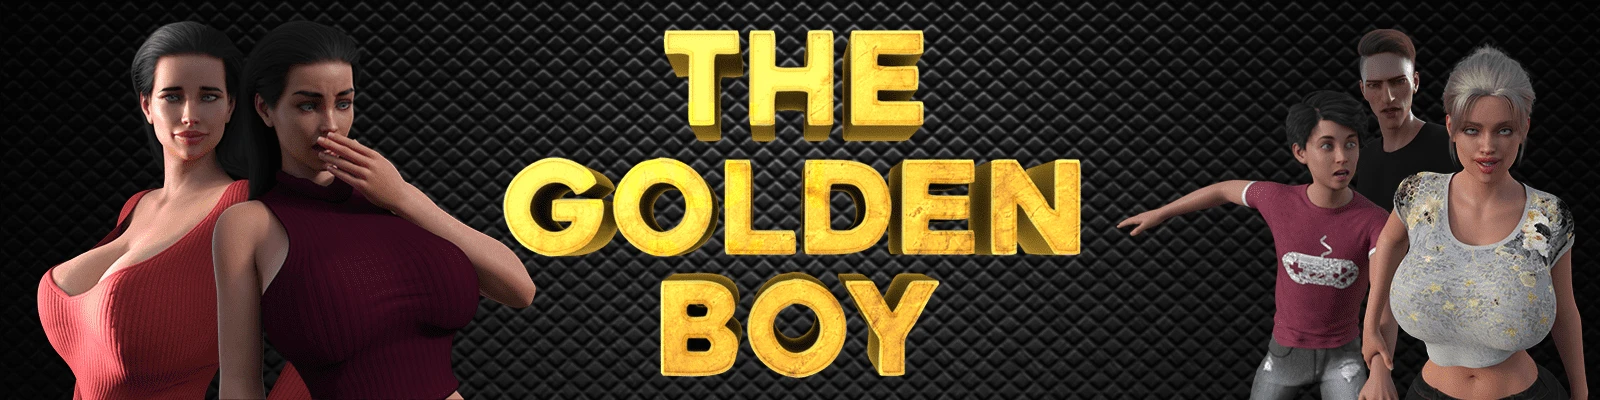 The golden boy game banner